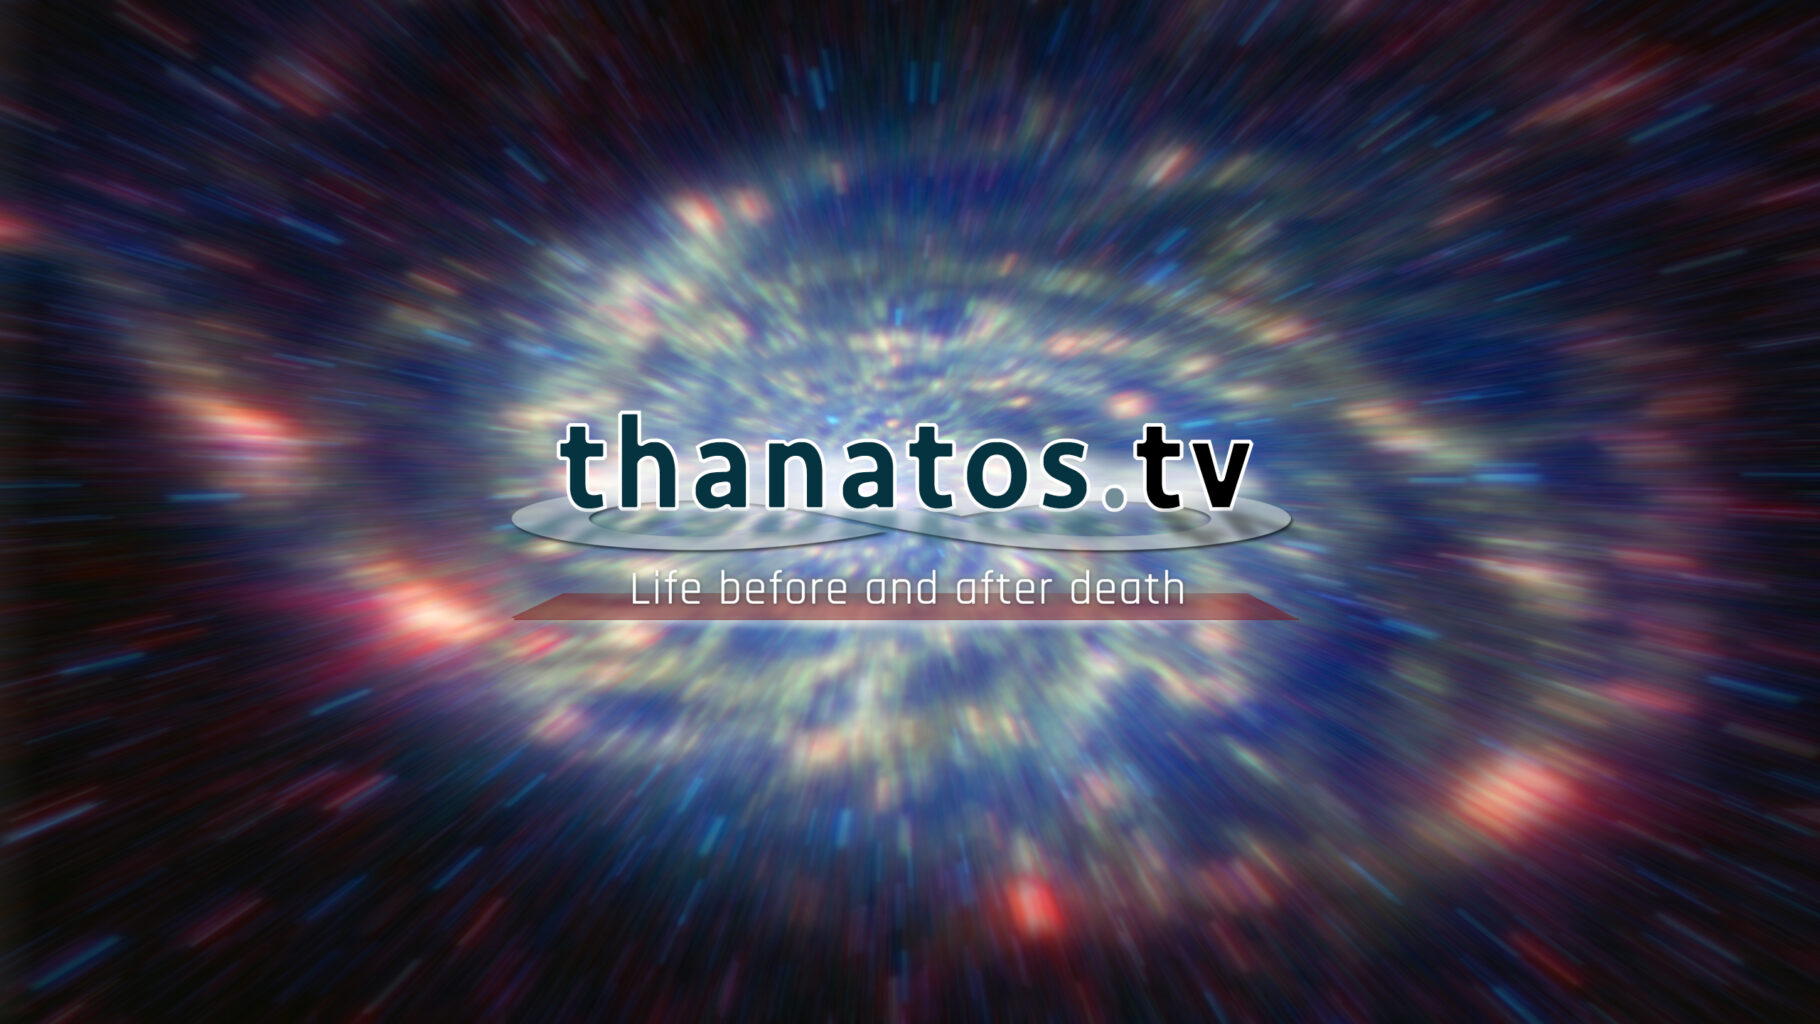 Seit heute online: Thanatos TV EN – Unser neuer englischsprachiger YouTube-Kanal